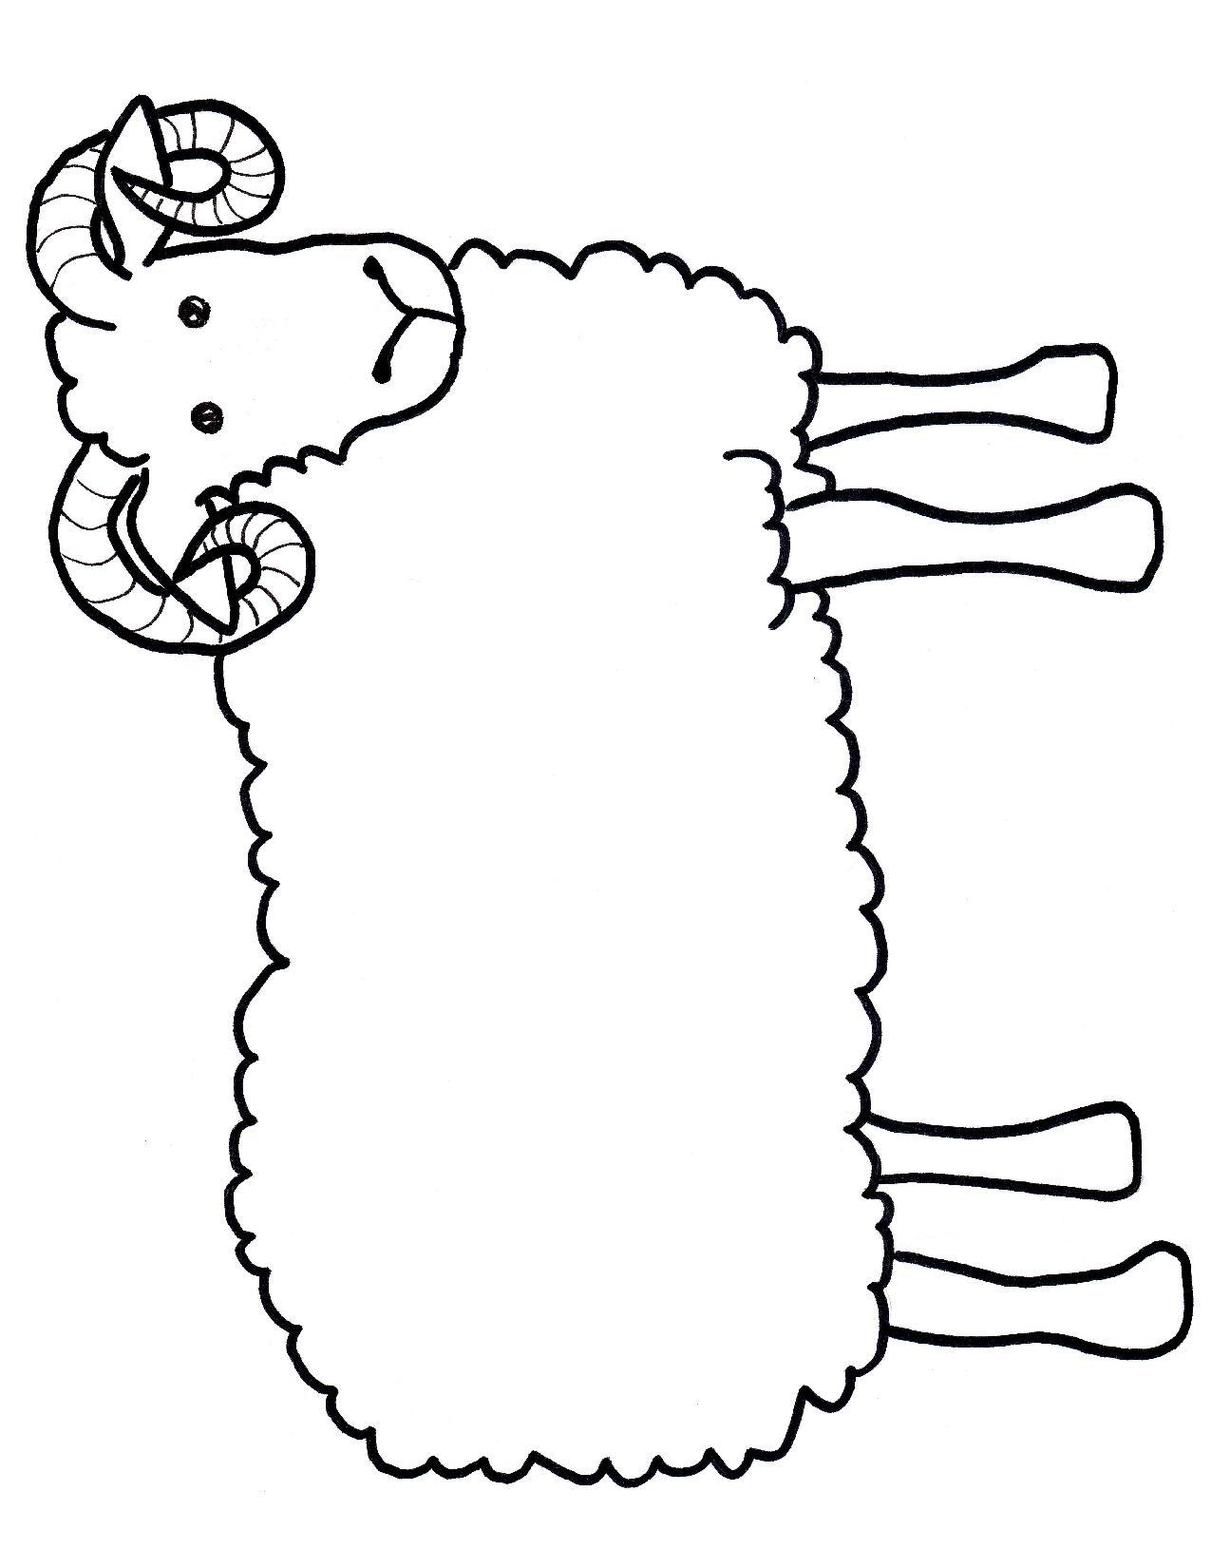 Ram sheep clipart clipartfest